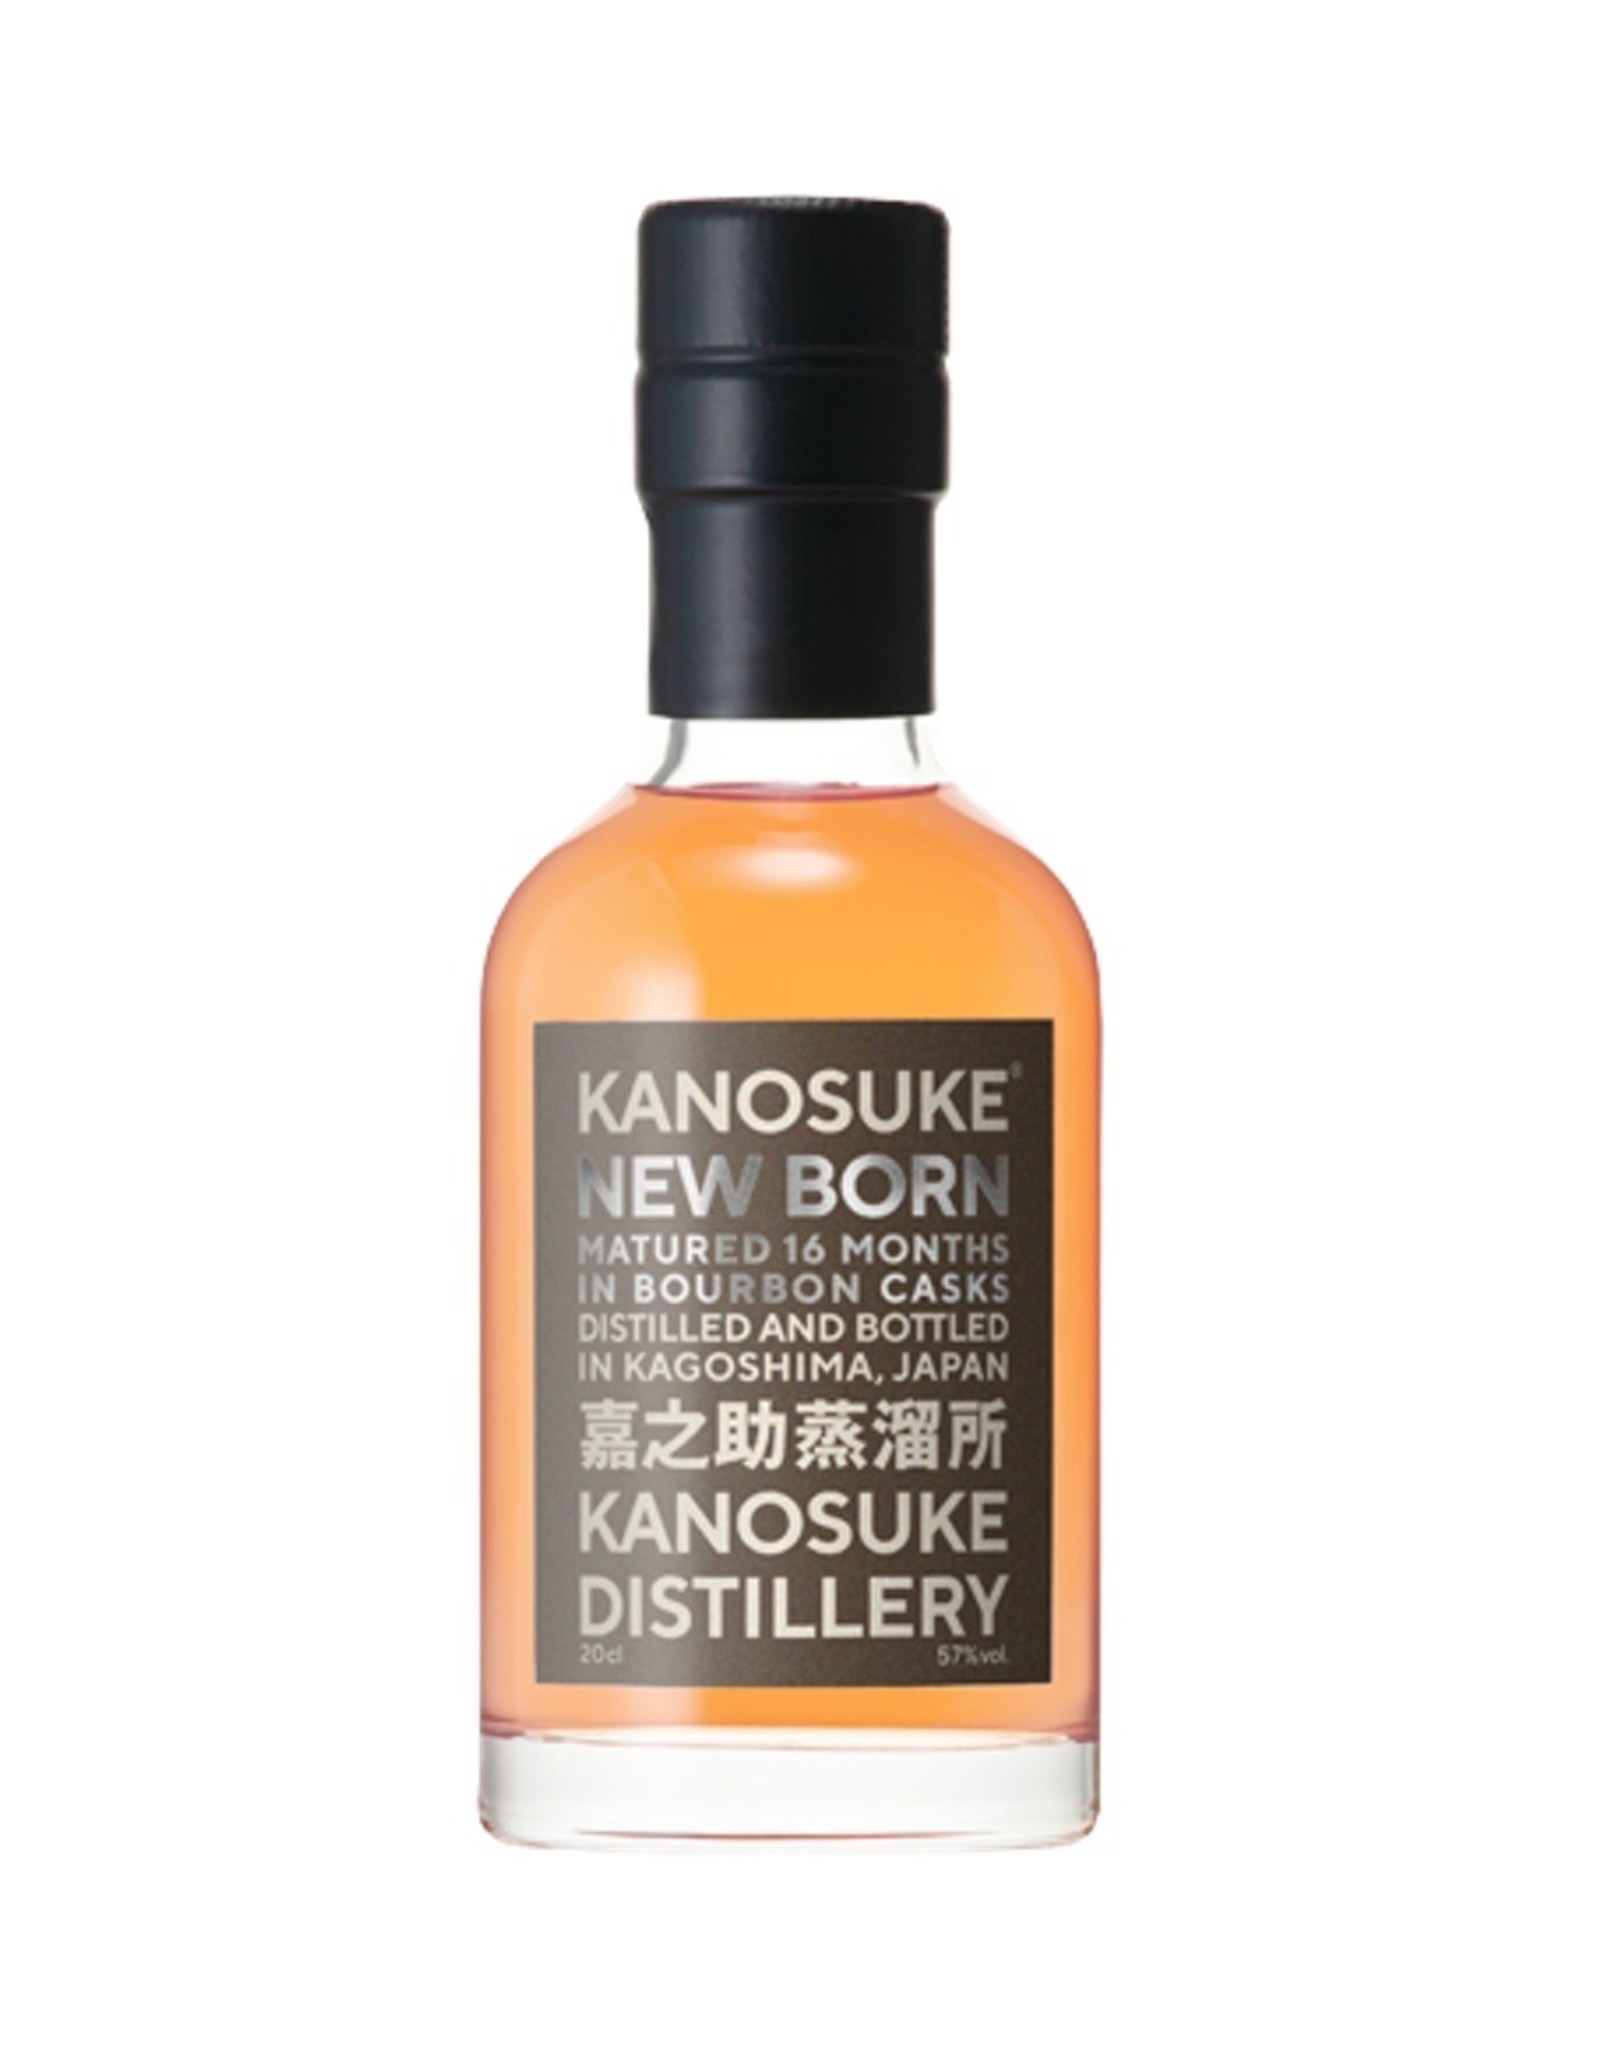 Kanosuke Distillery New Born 16 months Kagoshima, Japan 200ml